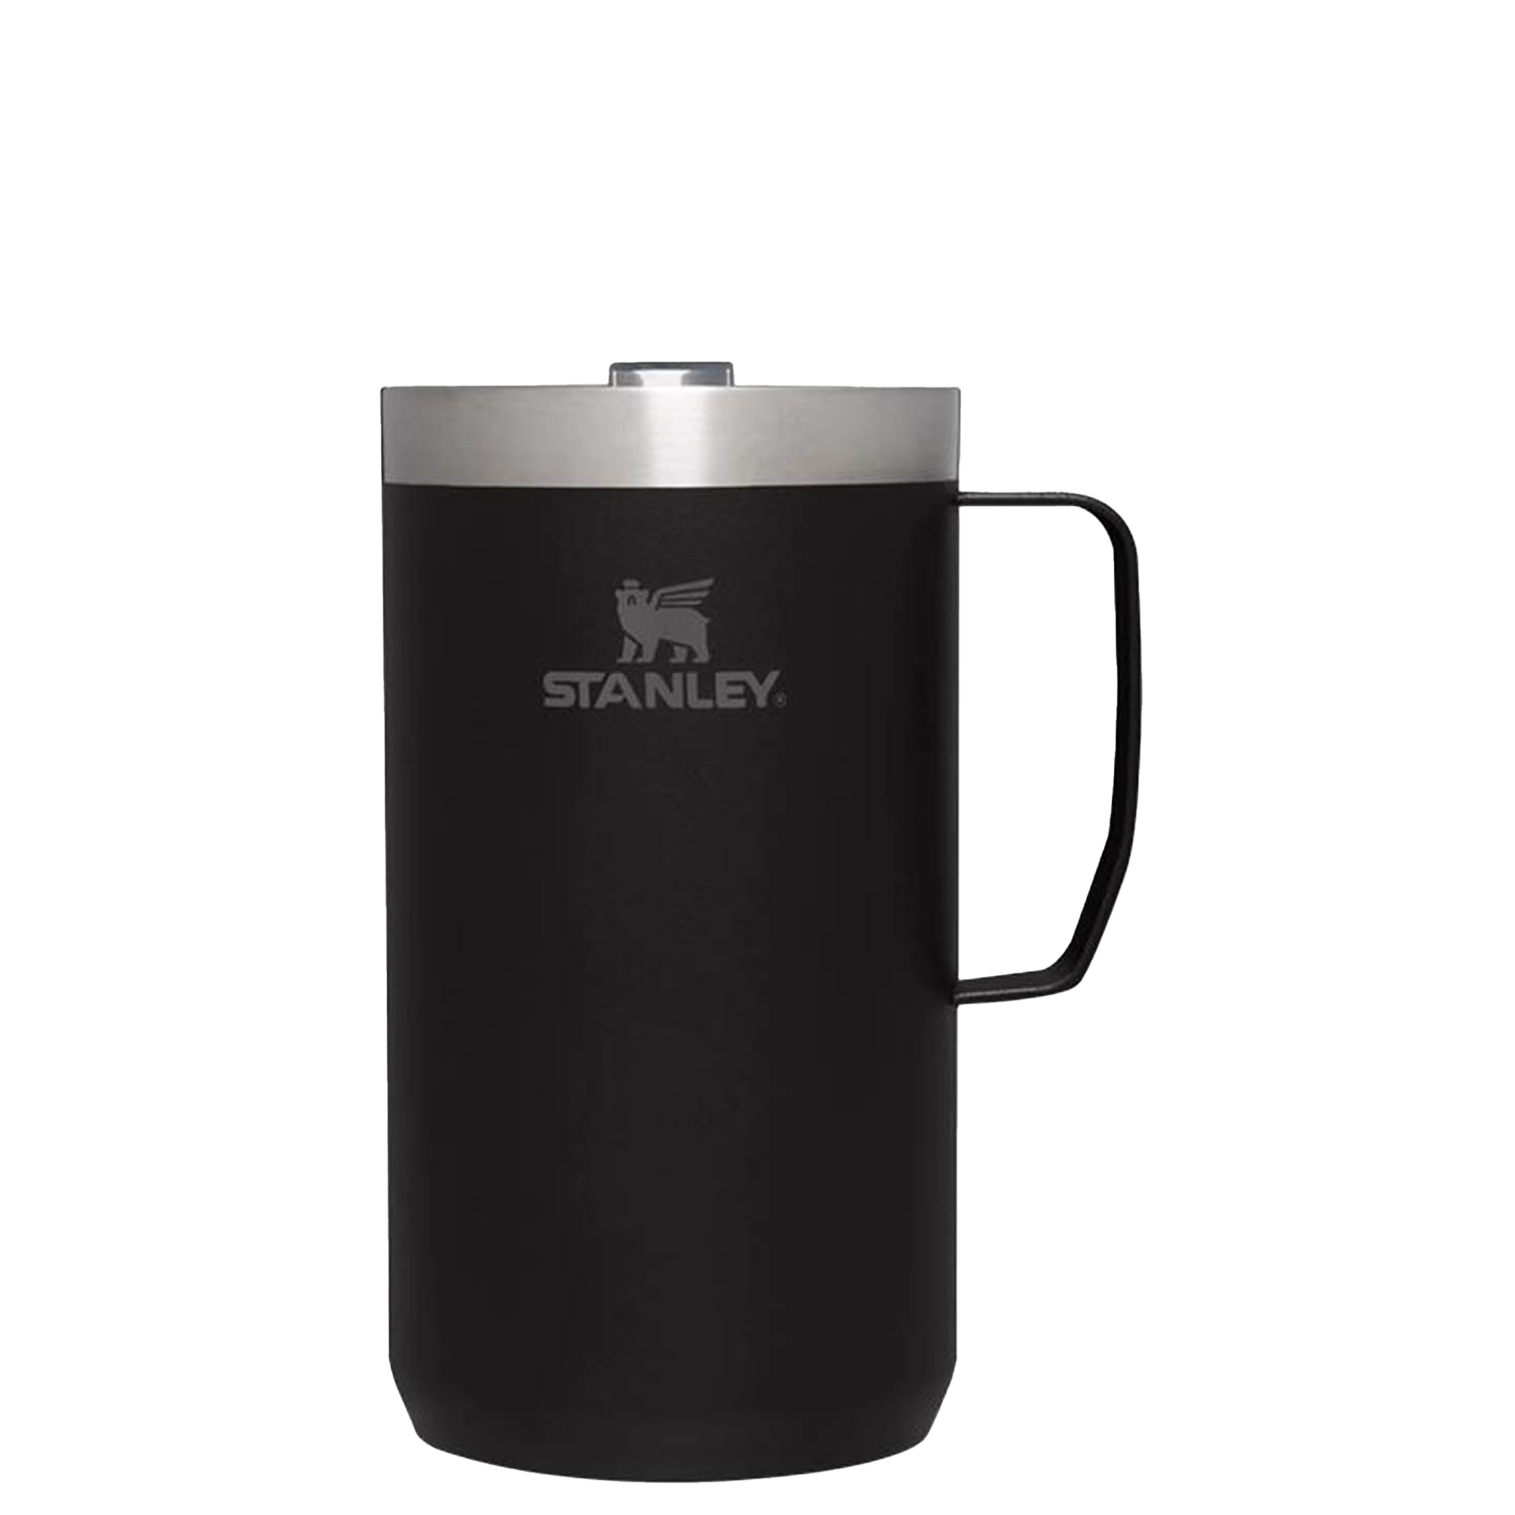 The Stanley Stay-Hot Camp Mug 24 OZ In Black